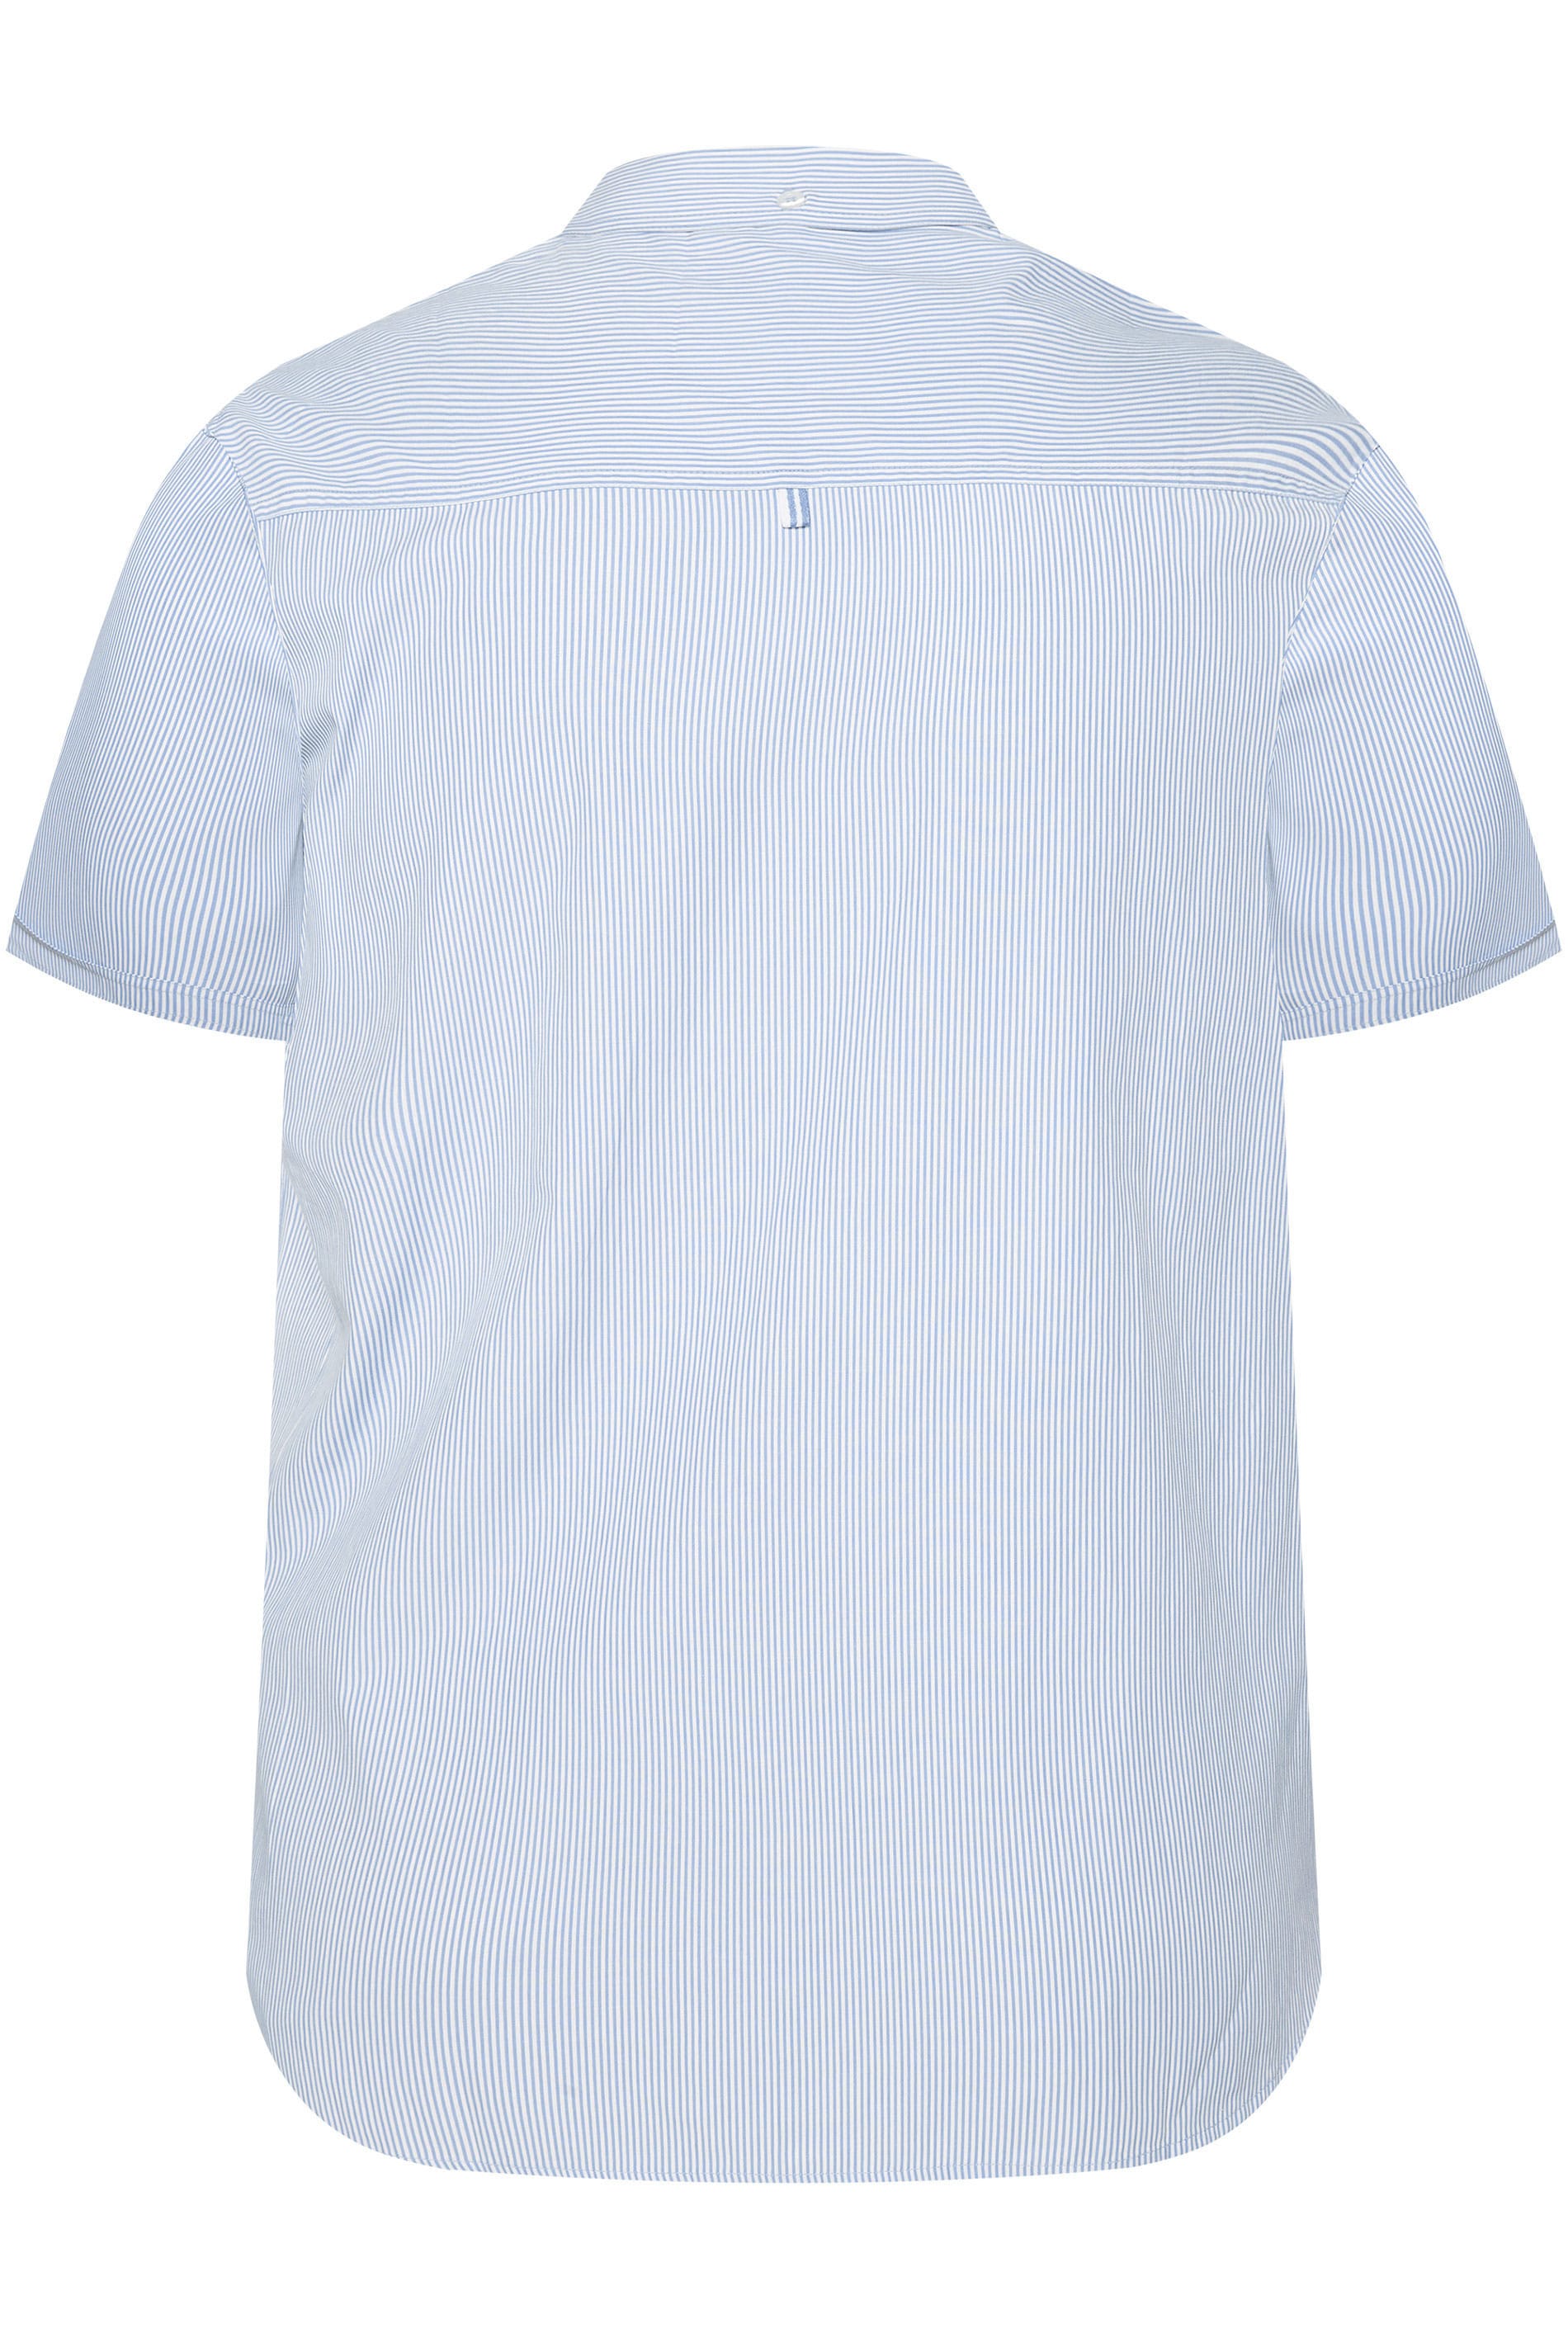 BadRhino Blue Pinstripe Short Sleeve Shirt | Sizes Medium - 8XL | BadRhino